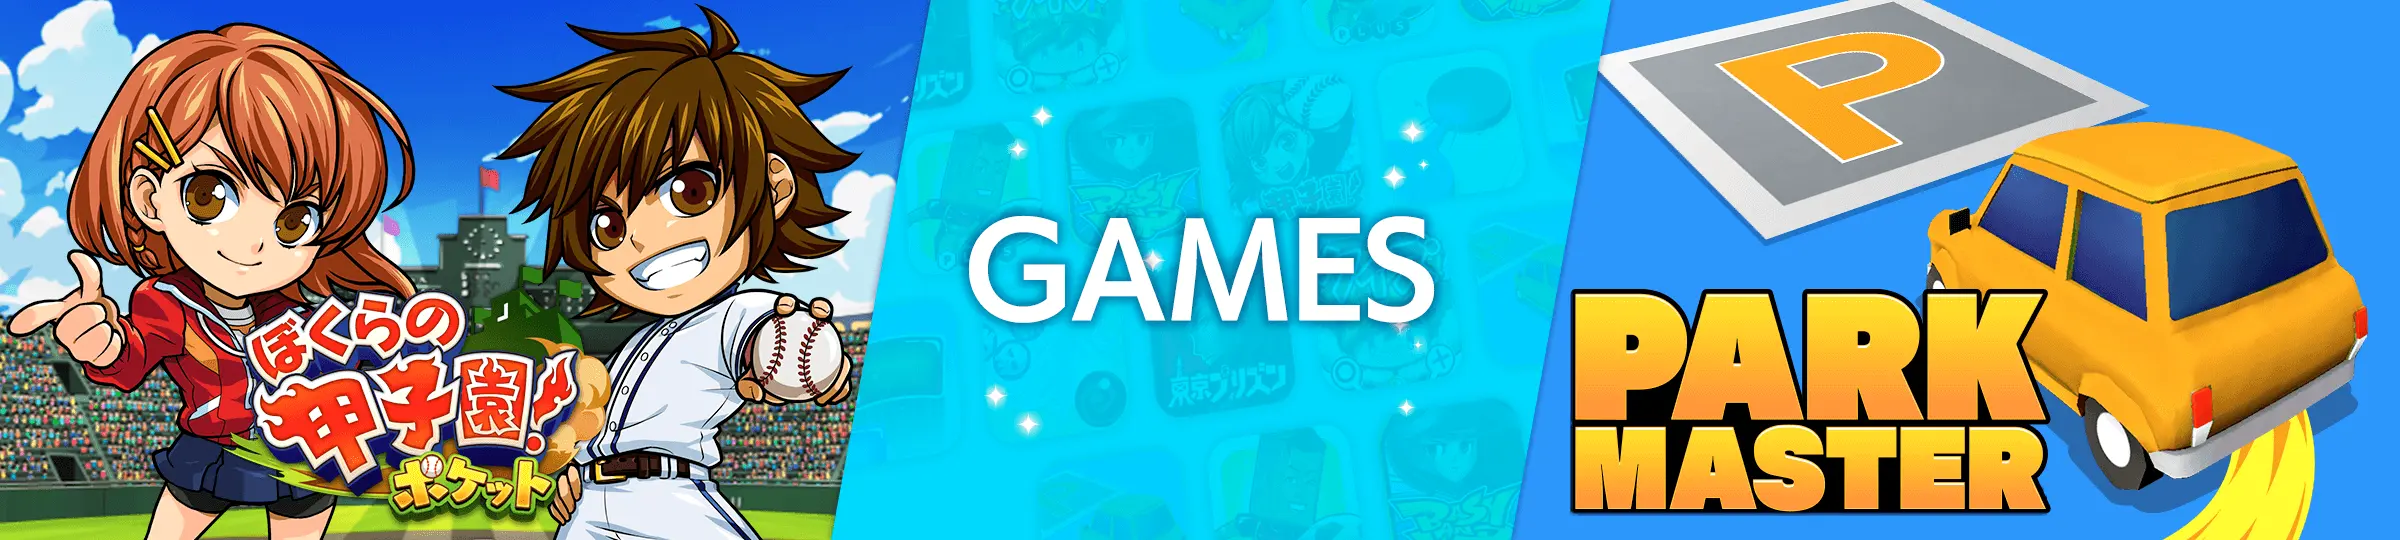 Games Business(Social Games, Hyper-casual Games, etc.)